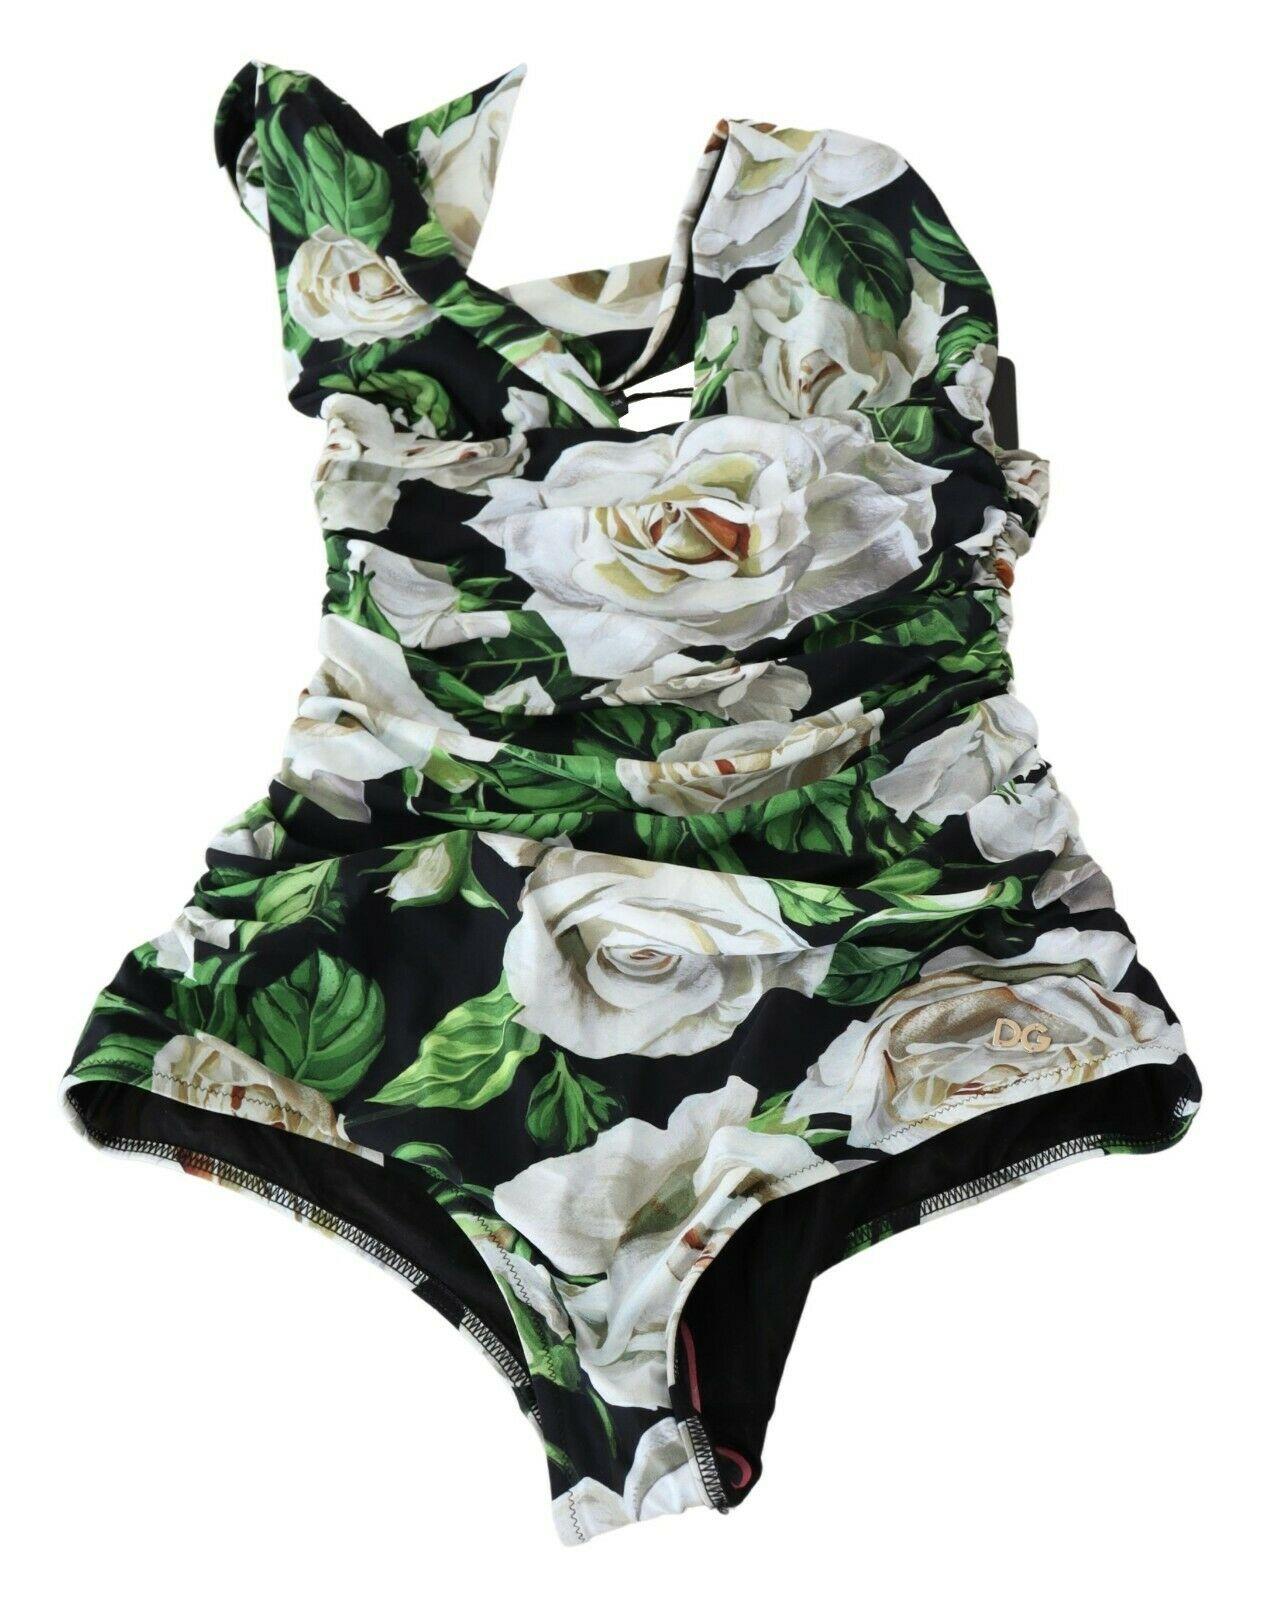 Dolce & Gabbana Black White Roses Flowers One Piece Swimsuit Swimwear Bikini In New Condition For Sale In WELWYN, GB